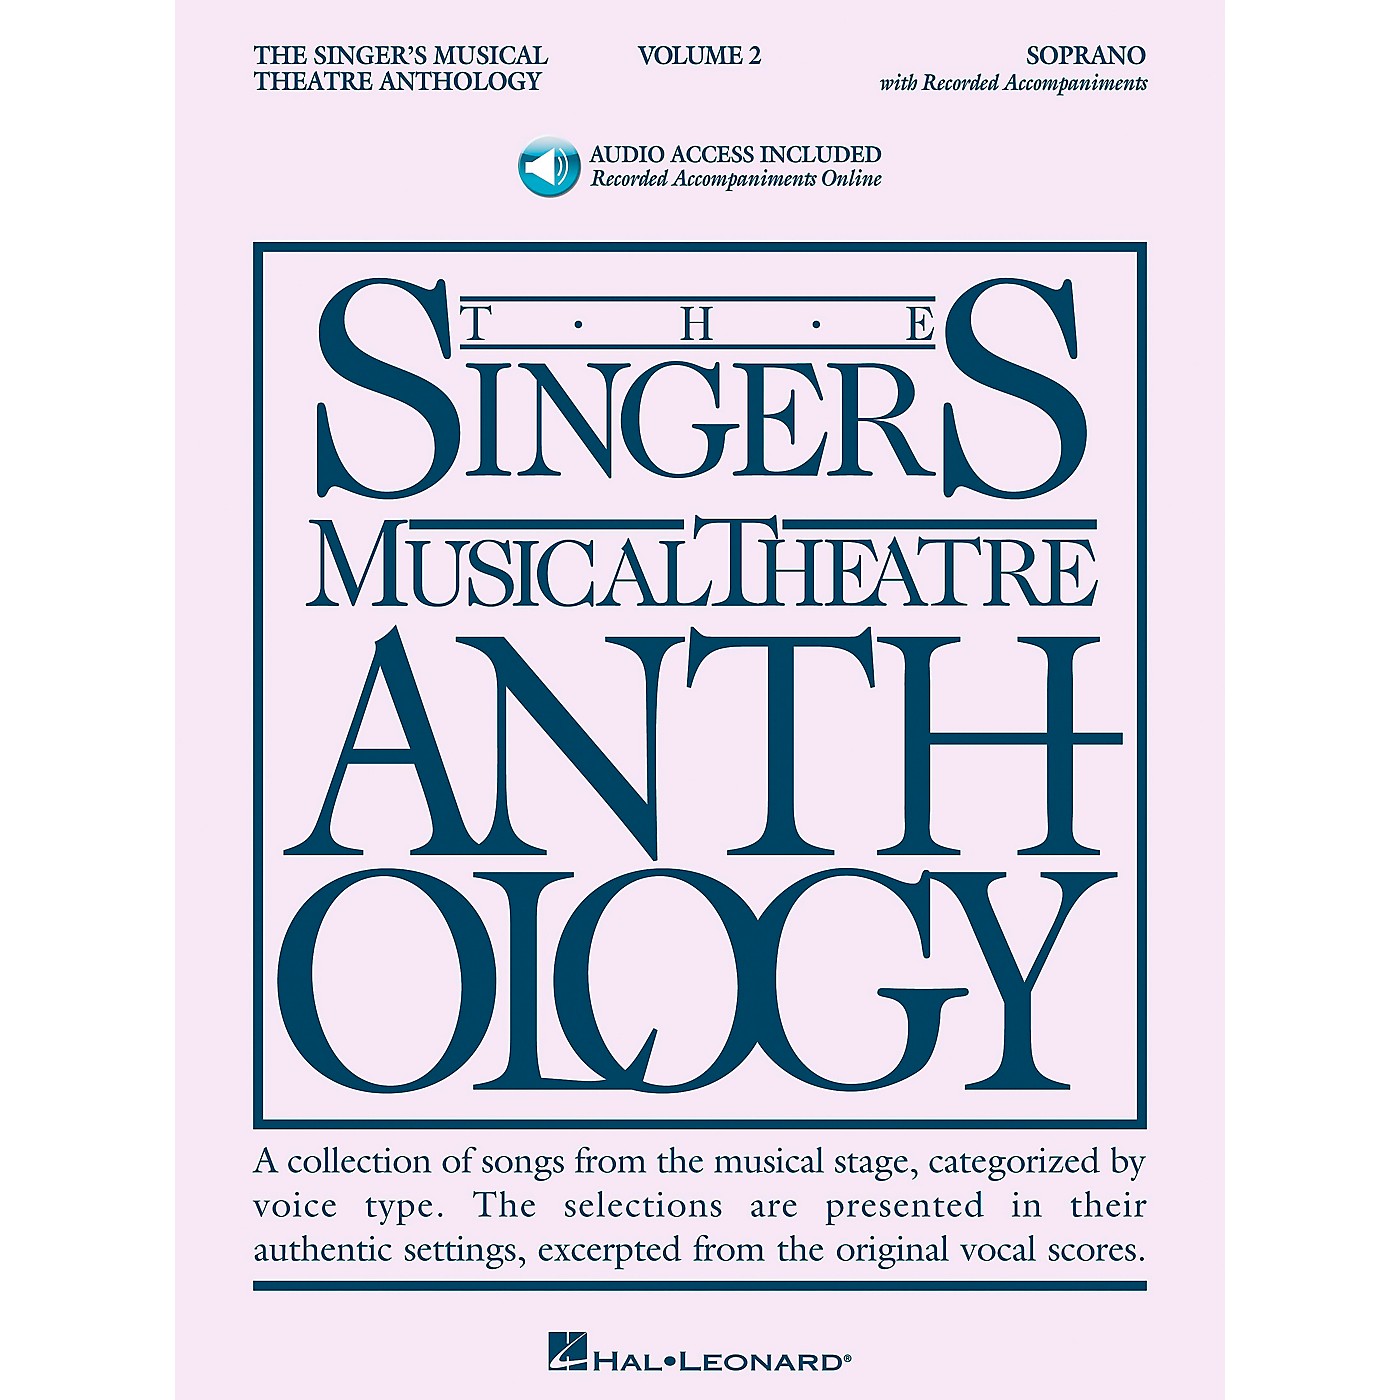 Hal Leonard Singer's Musical Theatre Anthology for Soprano Volume 2 Book/2CD's thumbnail